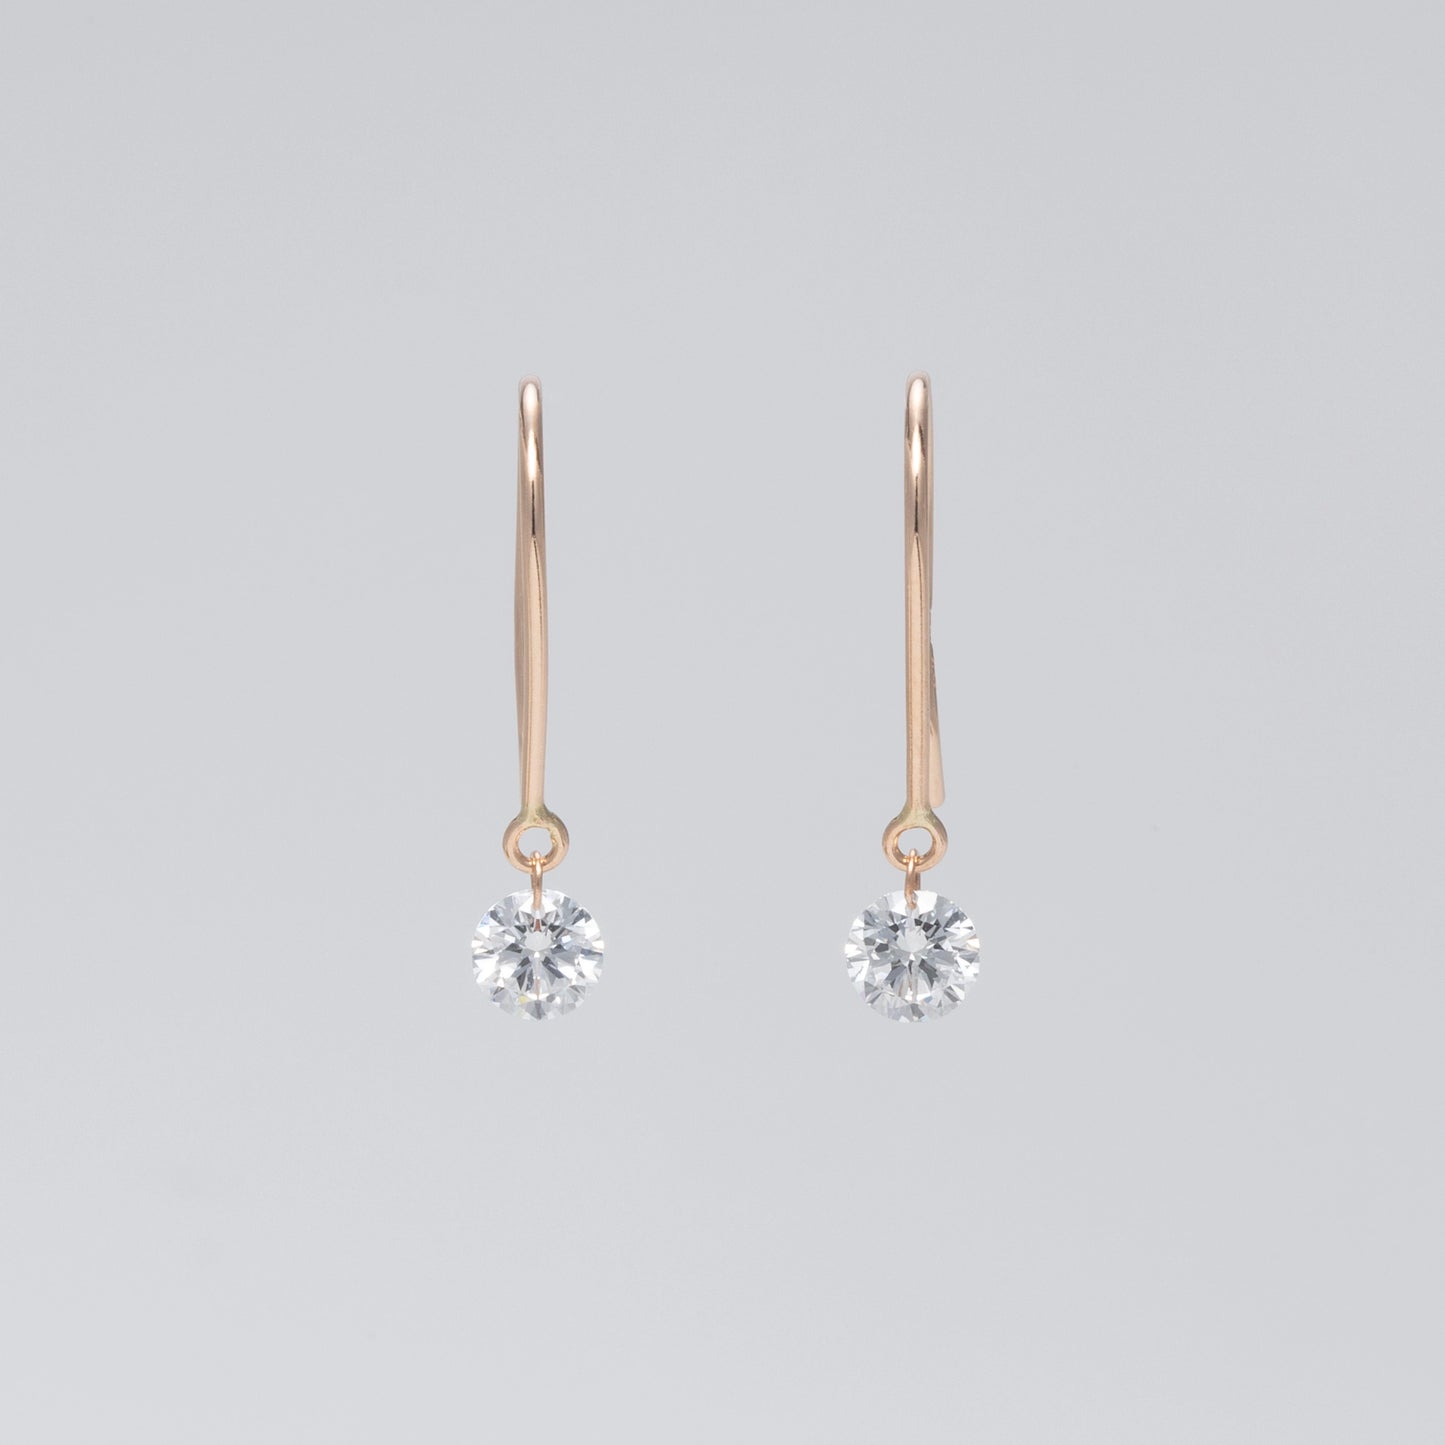 INNOCENCE1 grain earrings/ K18 pink gold/ 0.2 carat x 2 pieces